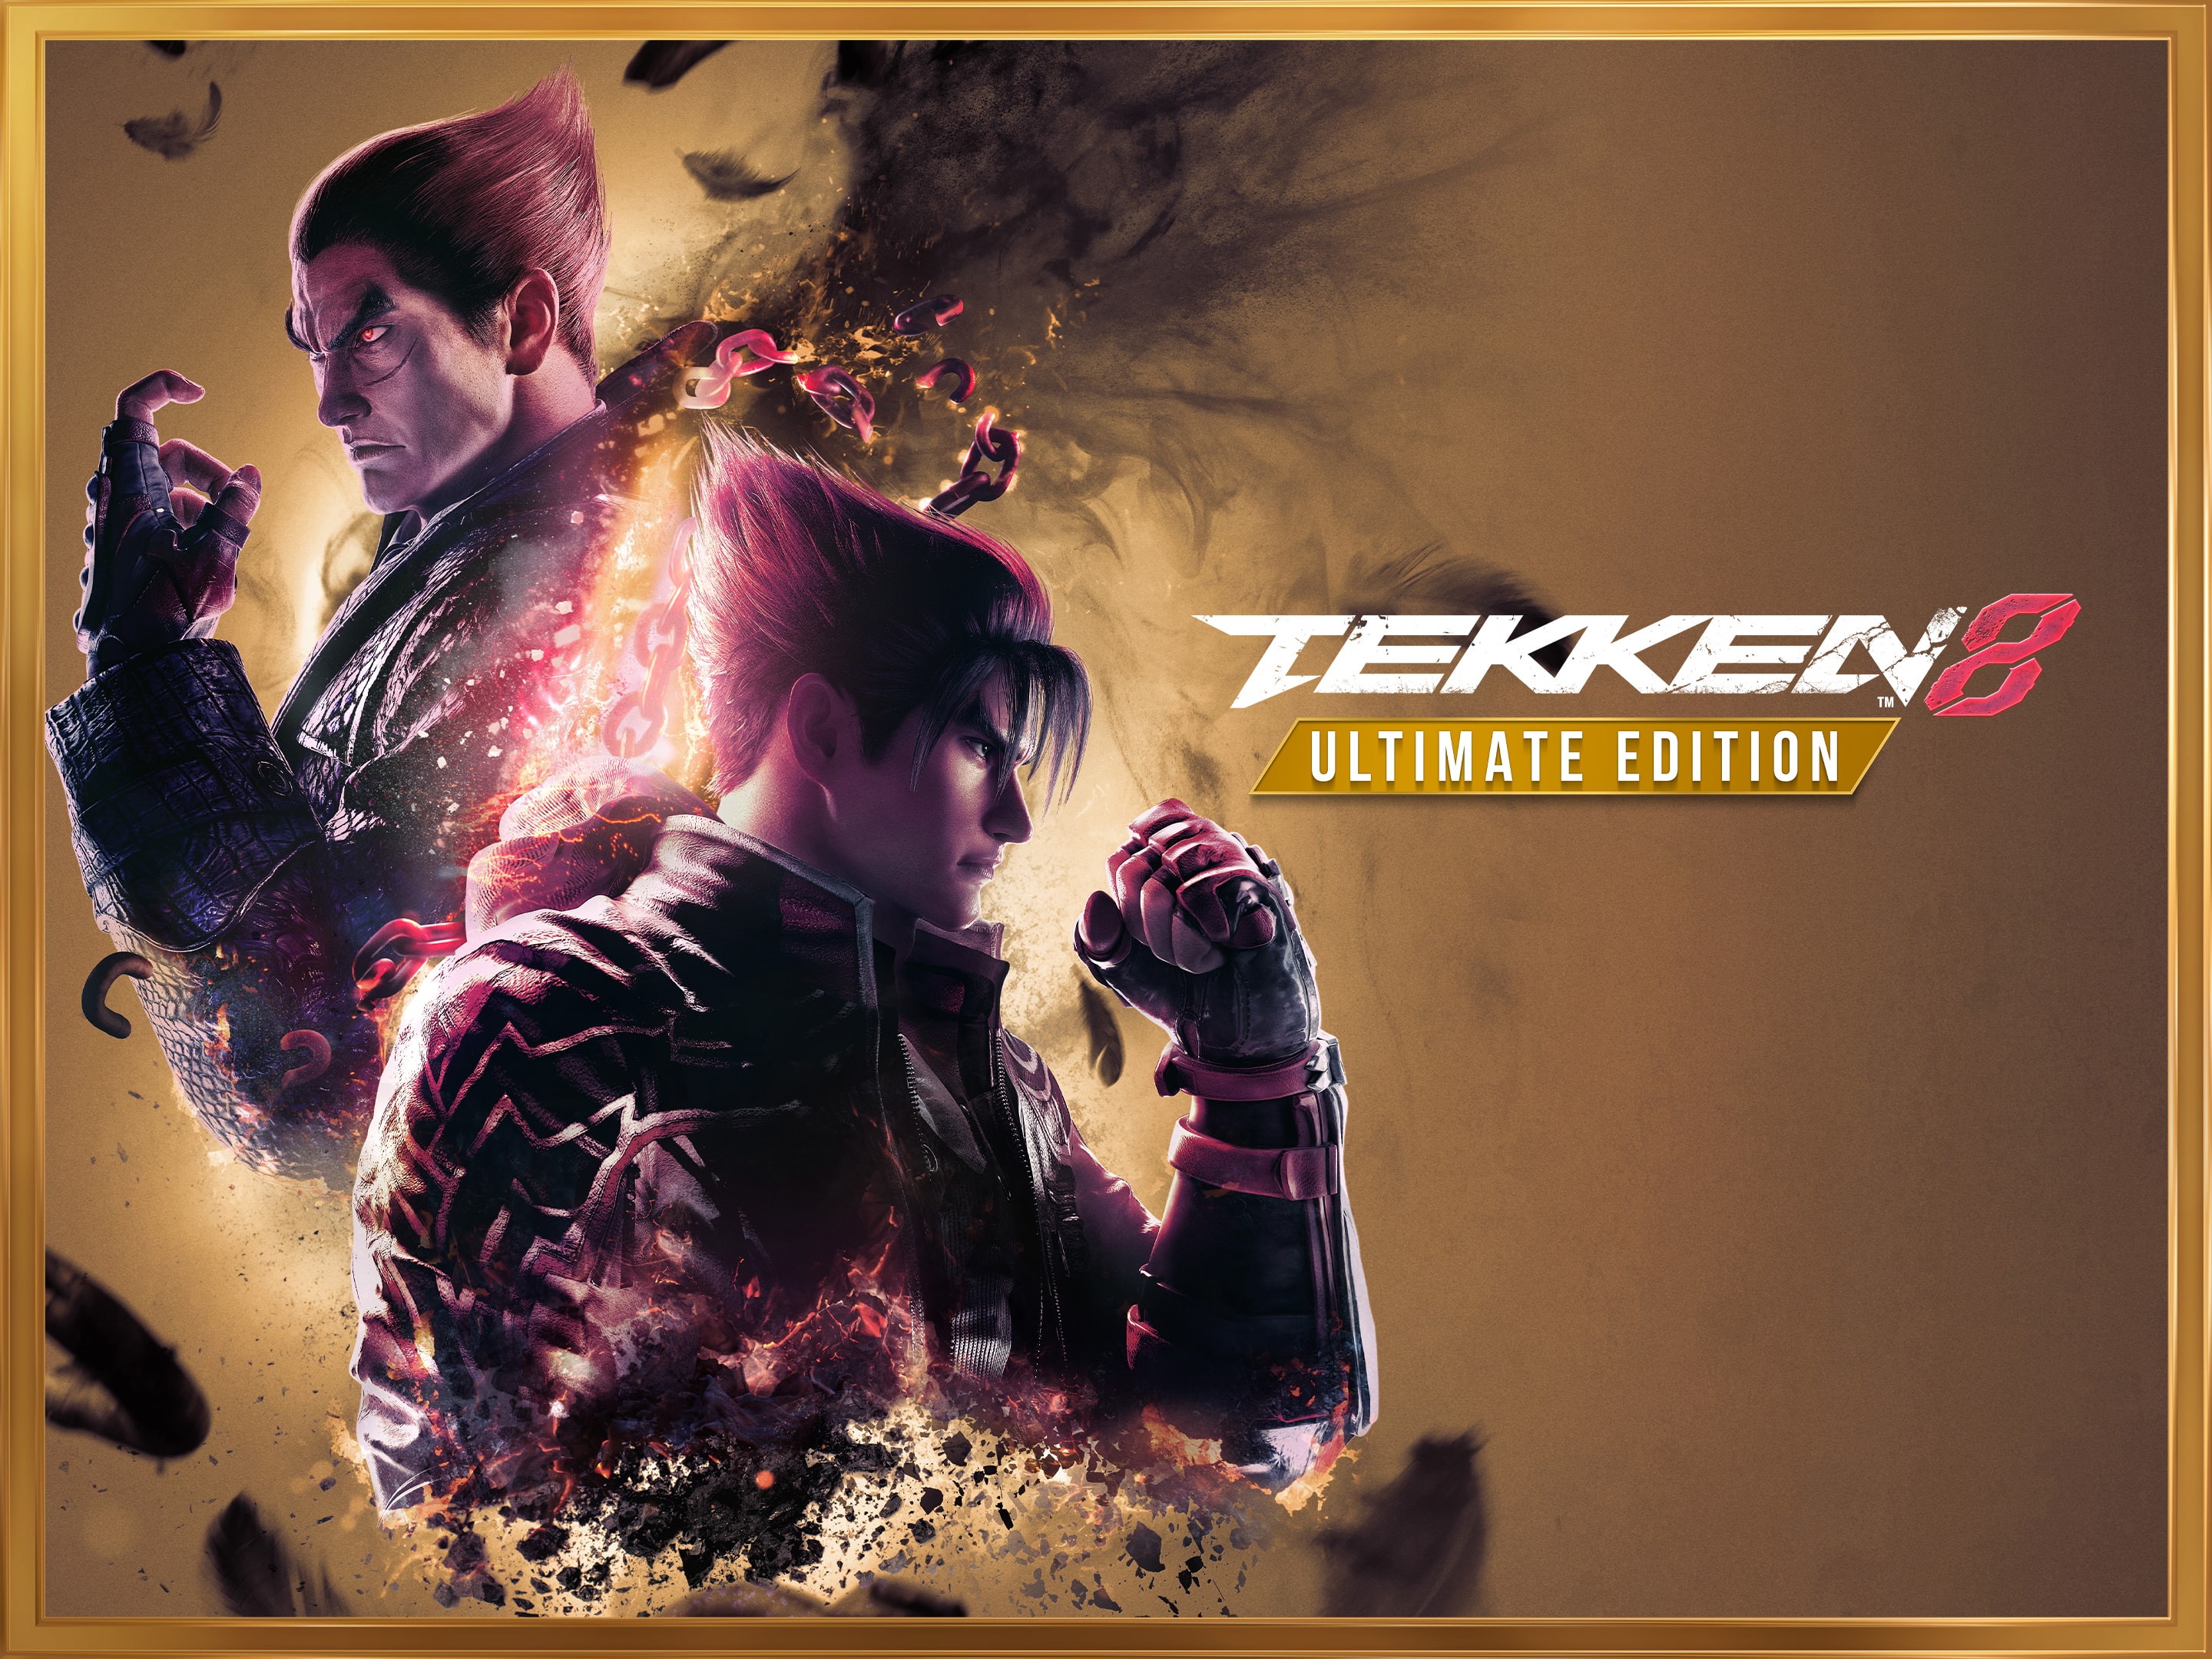 PS5 Tekken 8 Premium Collector Edition – Drakuli